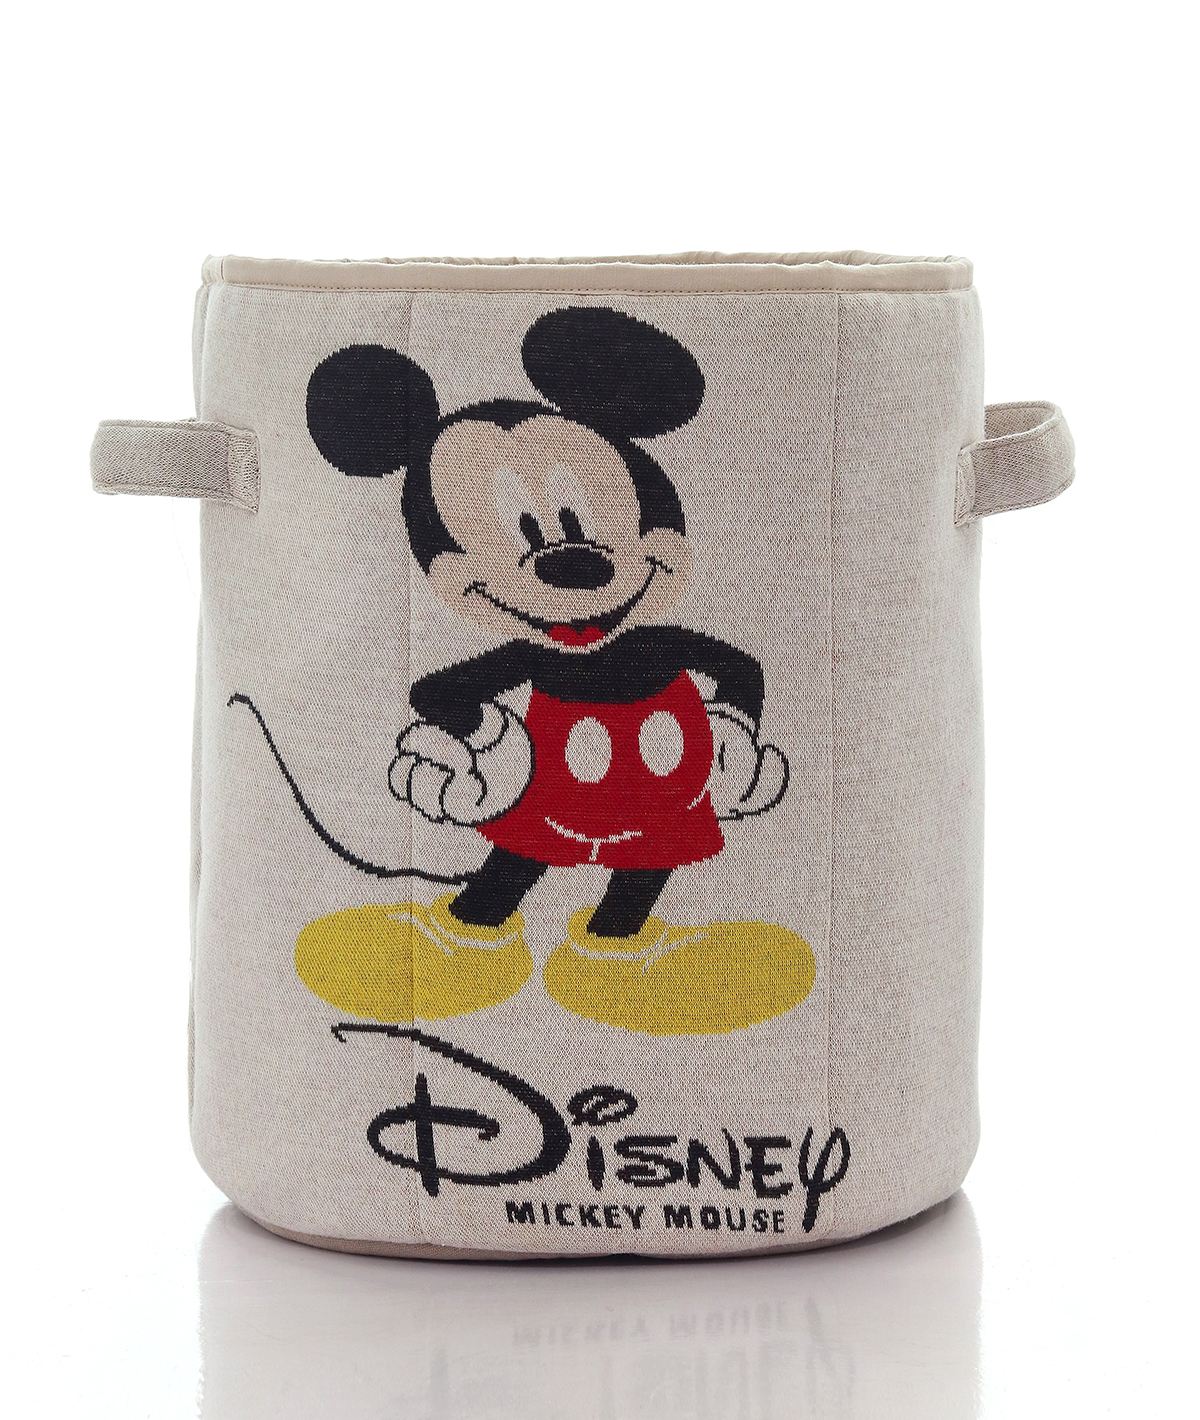 Disney mickey Mouse storage baskets